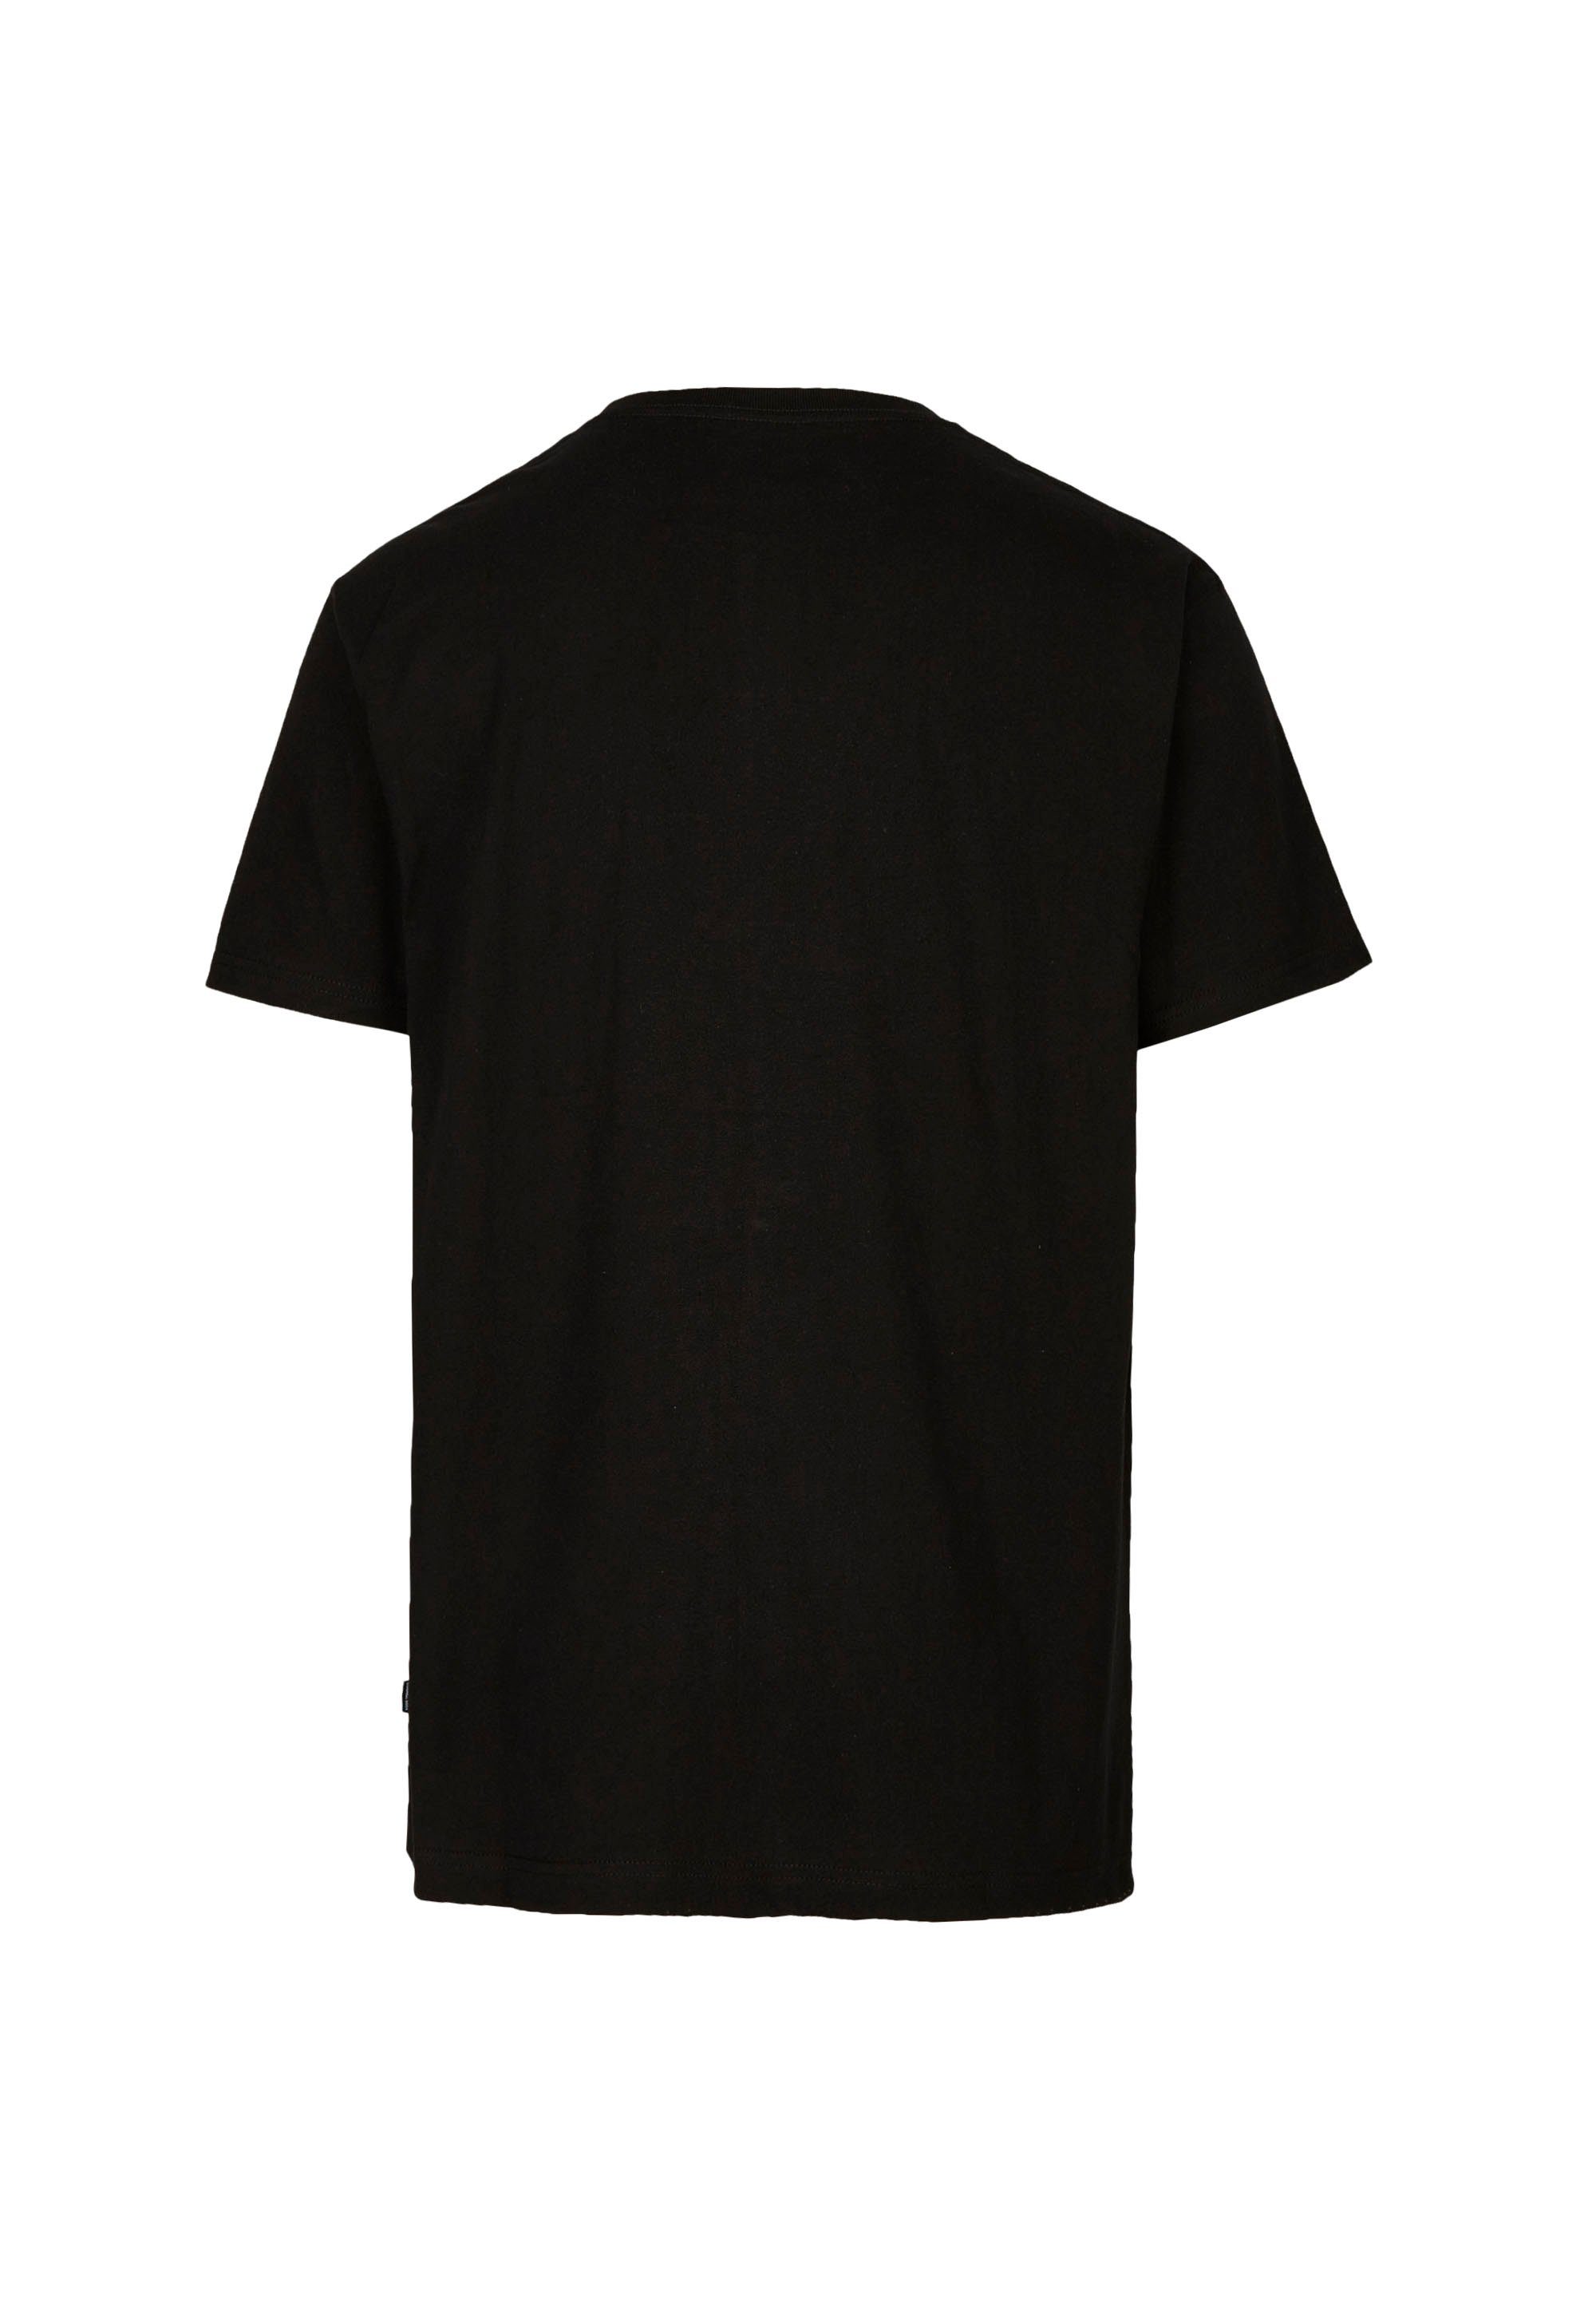 Design Boxy Cleptomanicx schwarz schlichtem 2 T-Shirt Ligull in